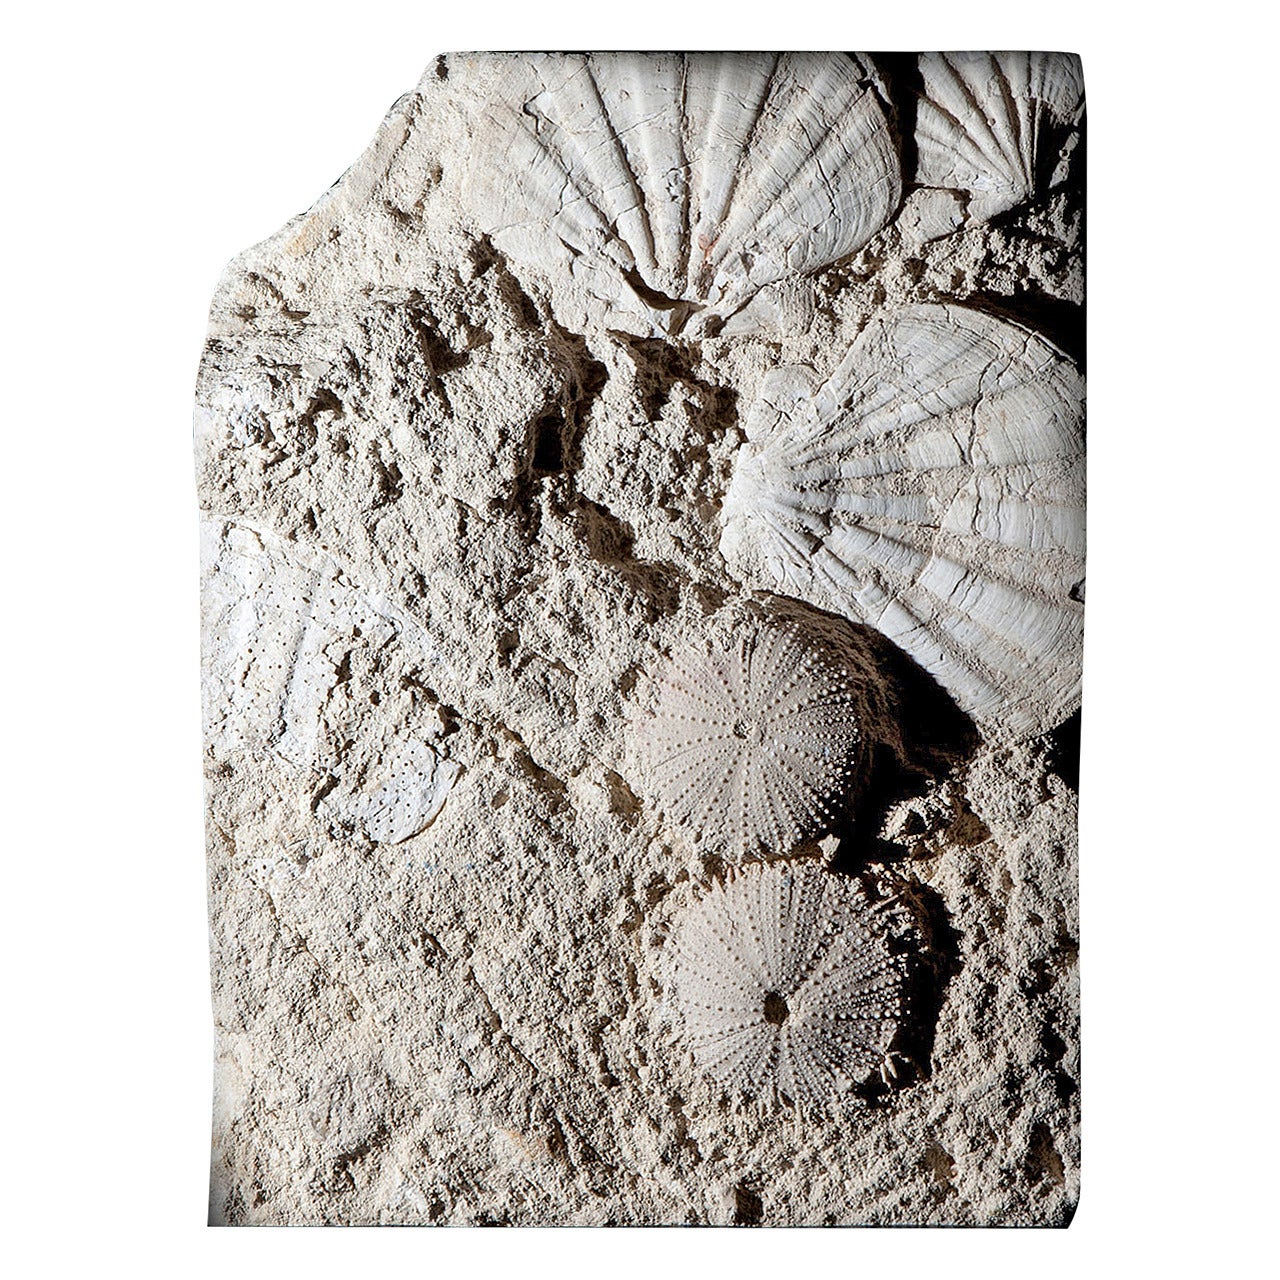 Sea Urchin and Pecten Fossil, France